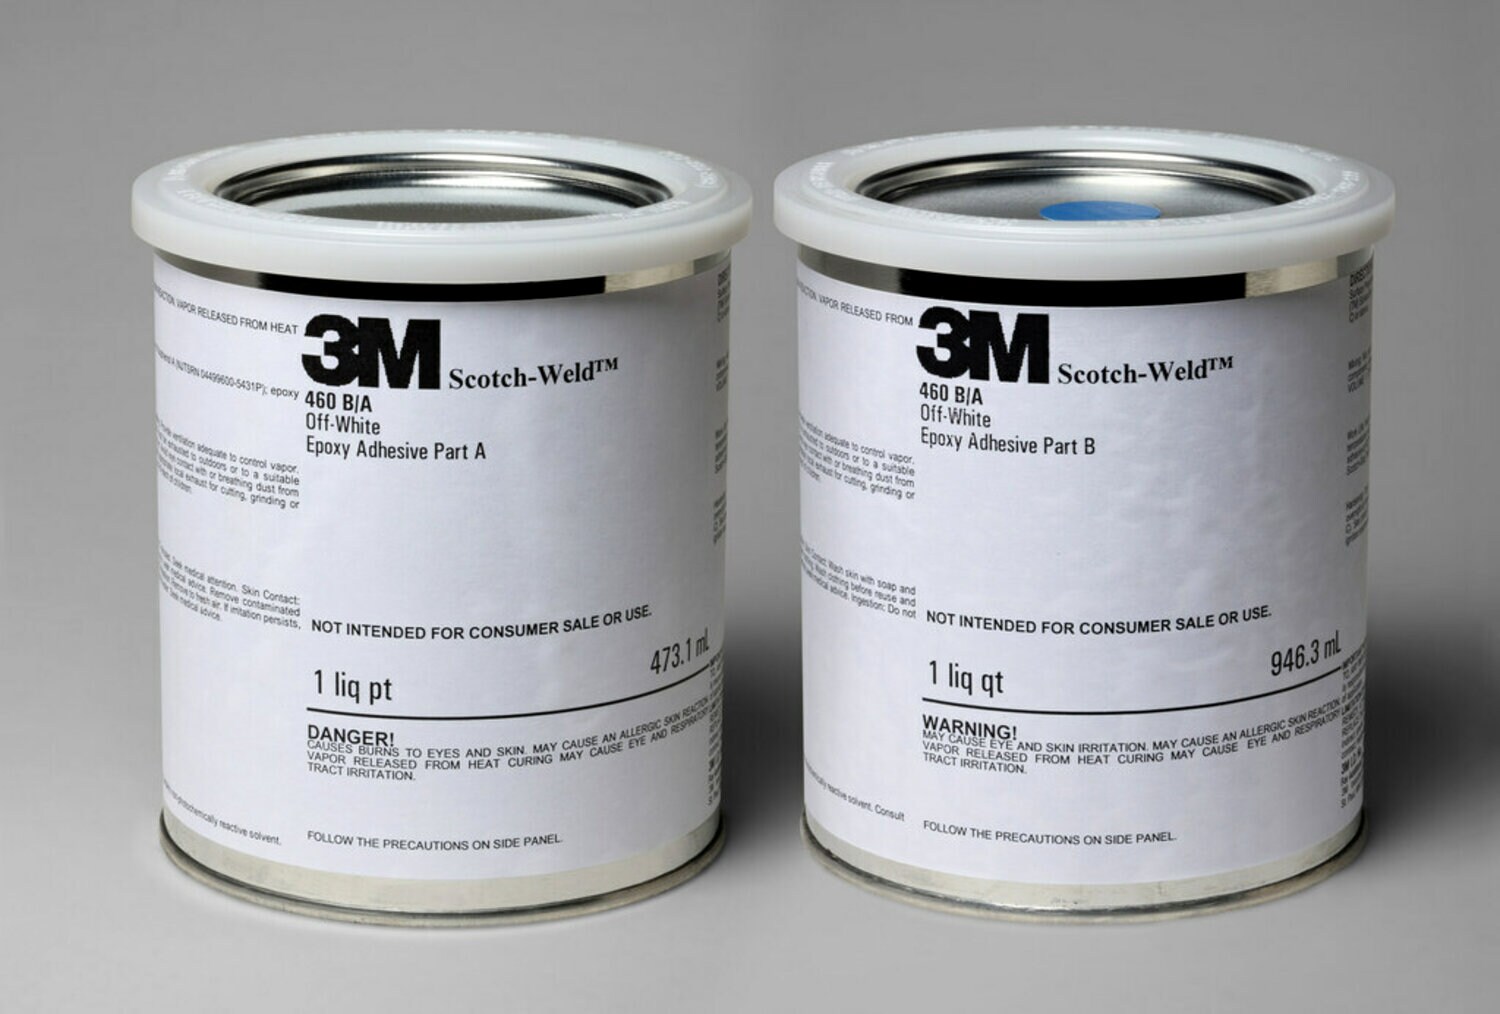 2 Component Glue Steel Epoxy Adhesive - Liquid Metal (resin and hardener)